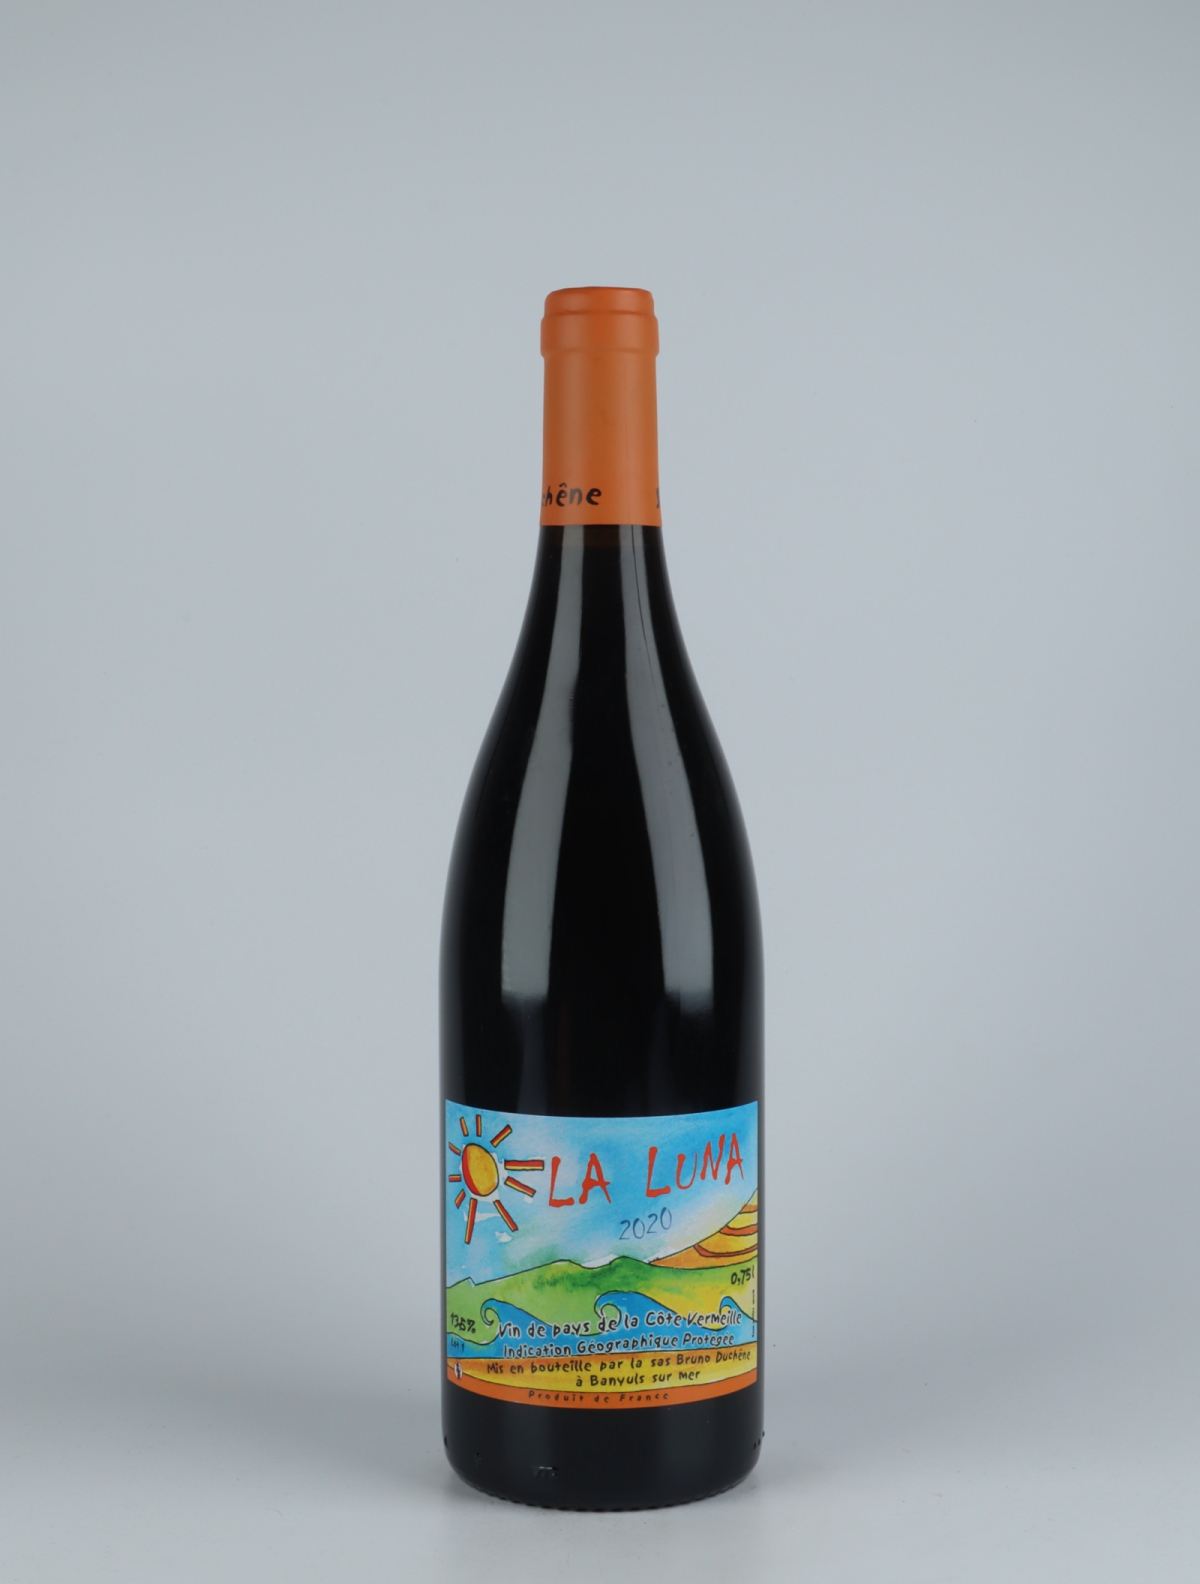 A bottle 2020 La Luna Red wine from , Rousillon in France